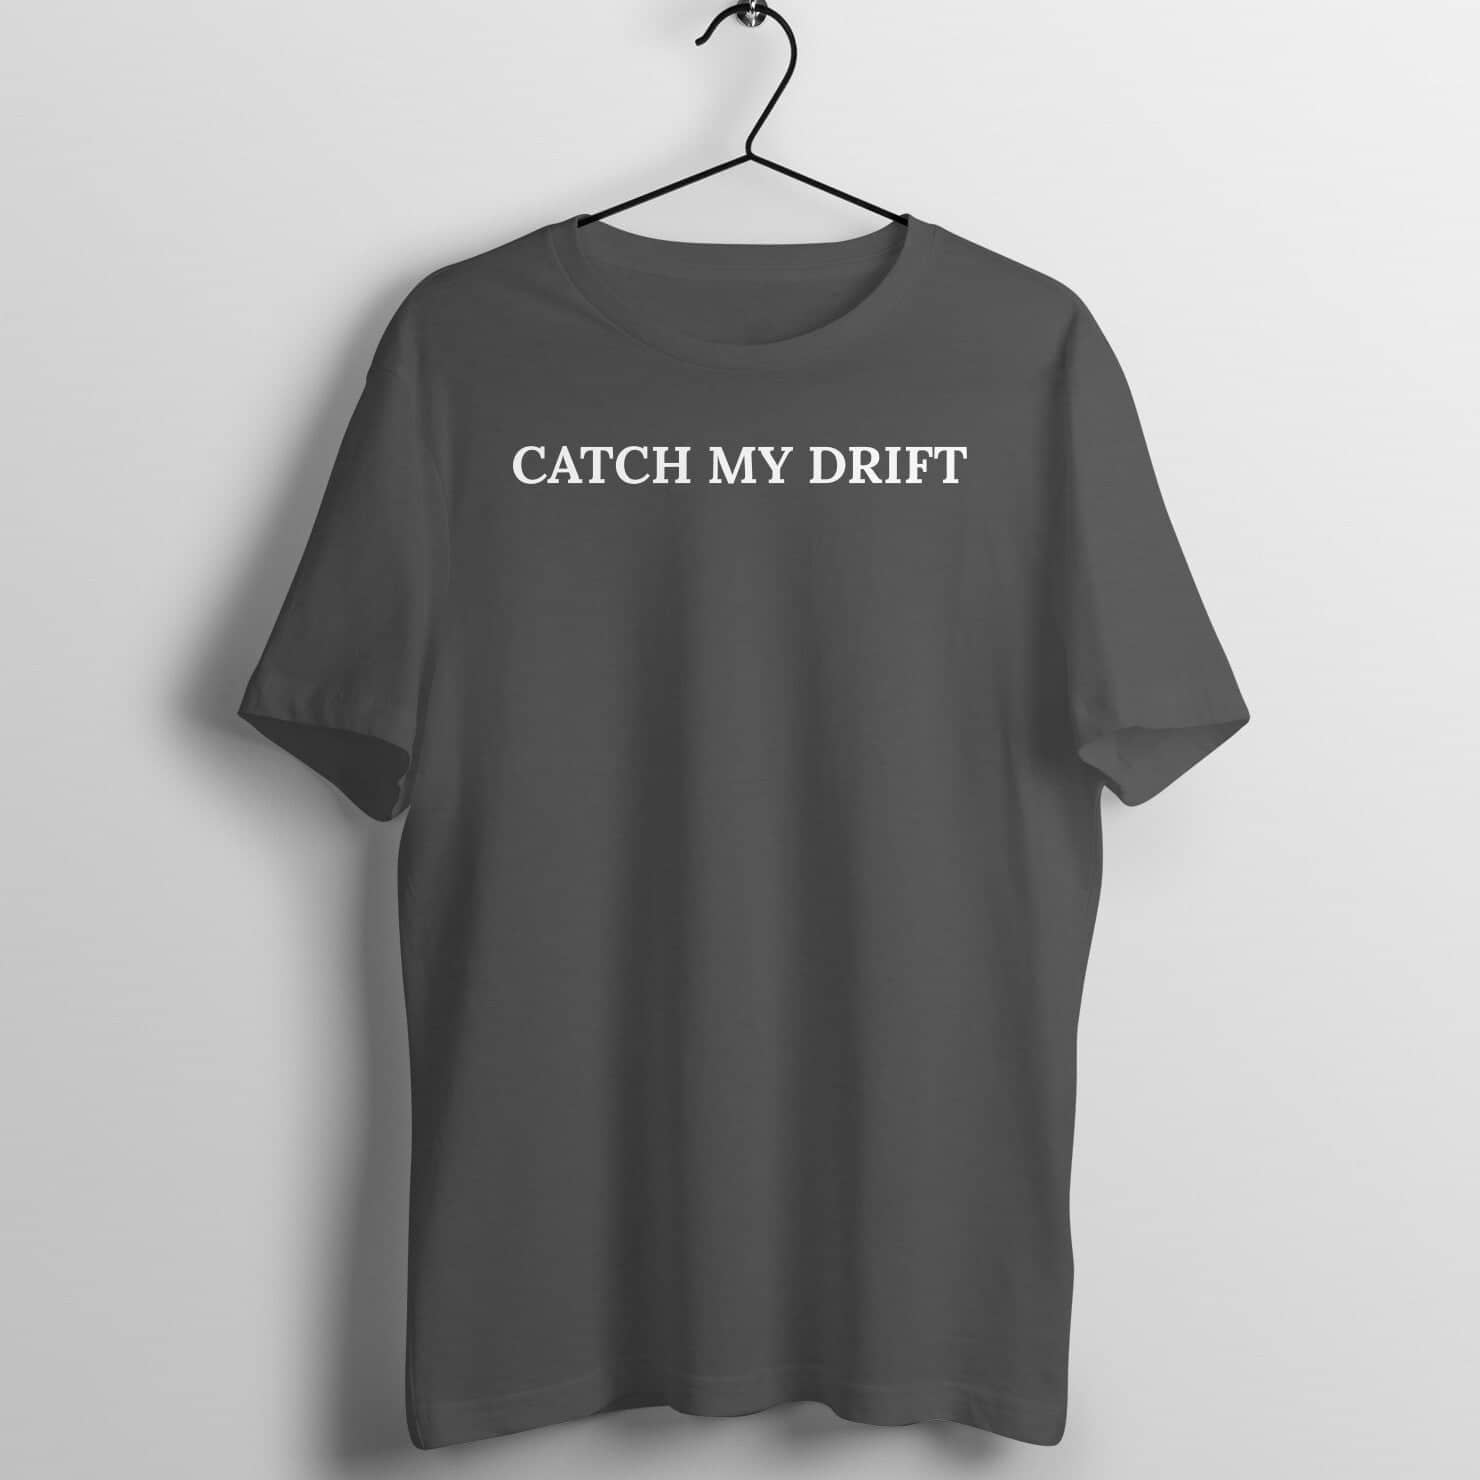 Catch My Drift Original T Shirt for Men and Women freeshipping - Catch My Drift India